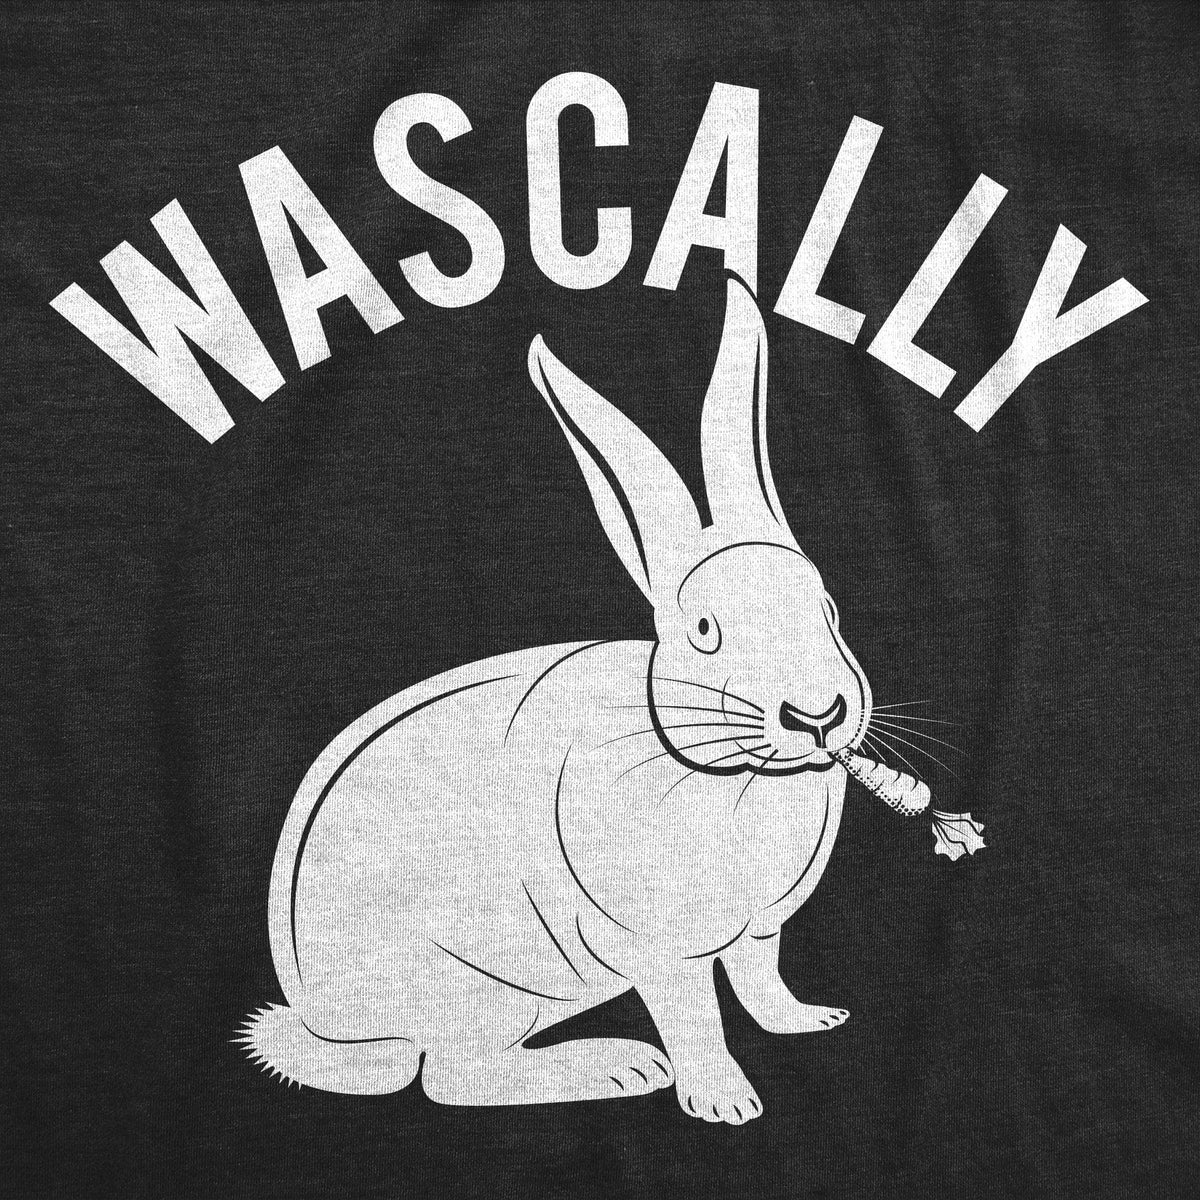 Wascally Rabbit Men&#39;s Tshirt  -  Crazy Dog T-Shirts